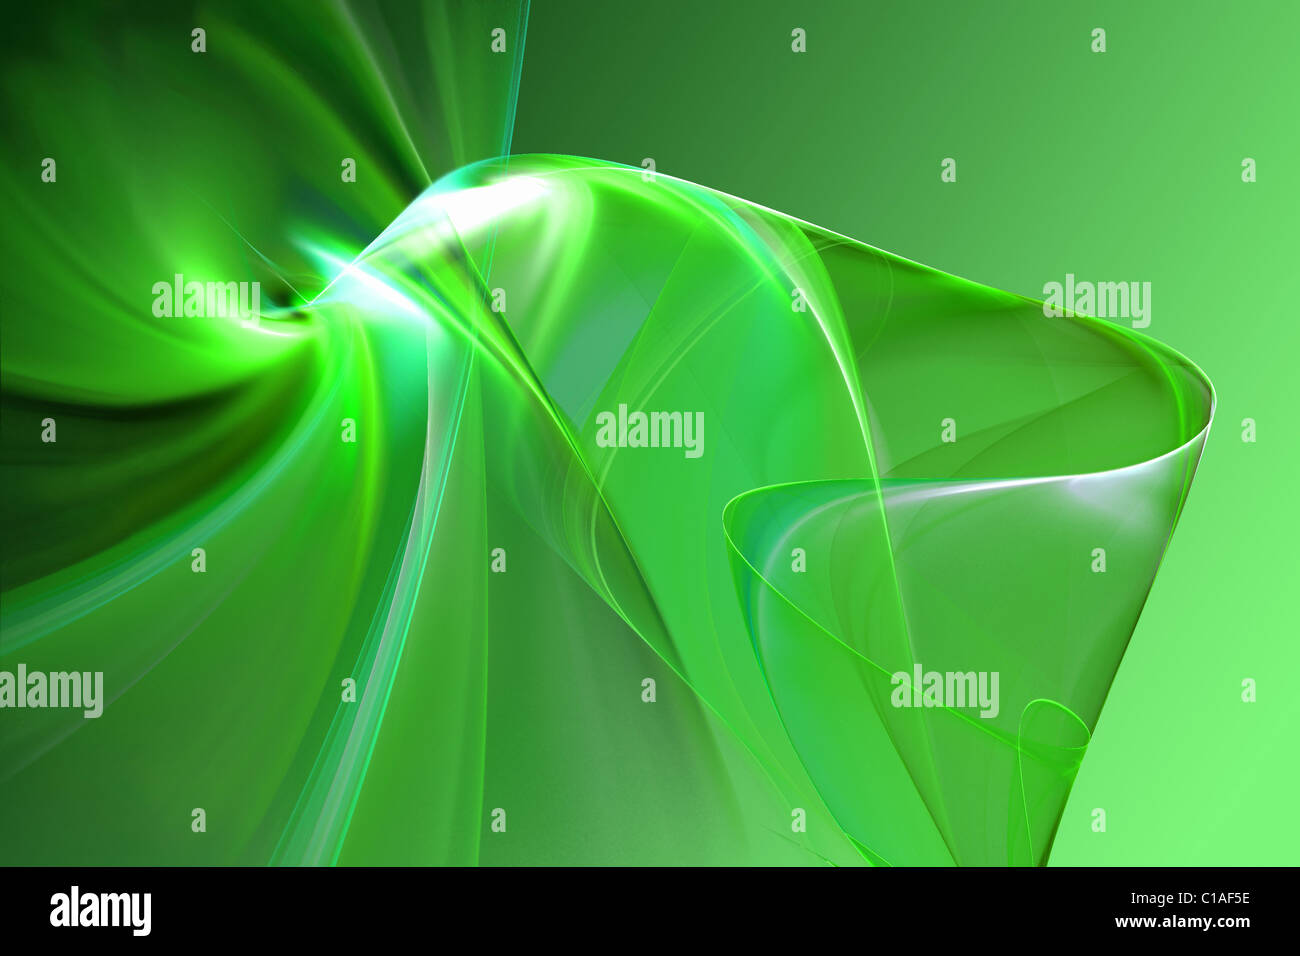 Abstract green 3D shape illustration Stock Photo